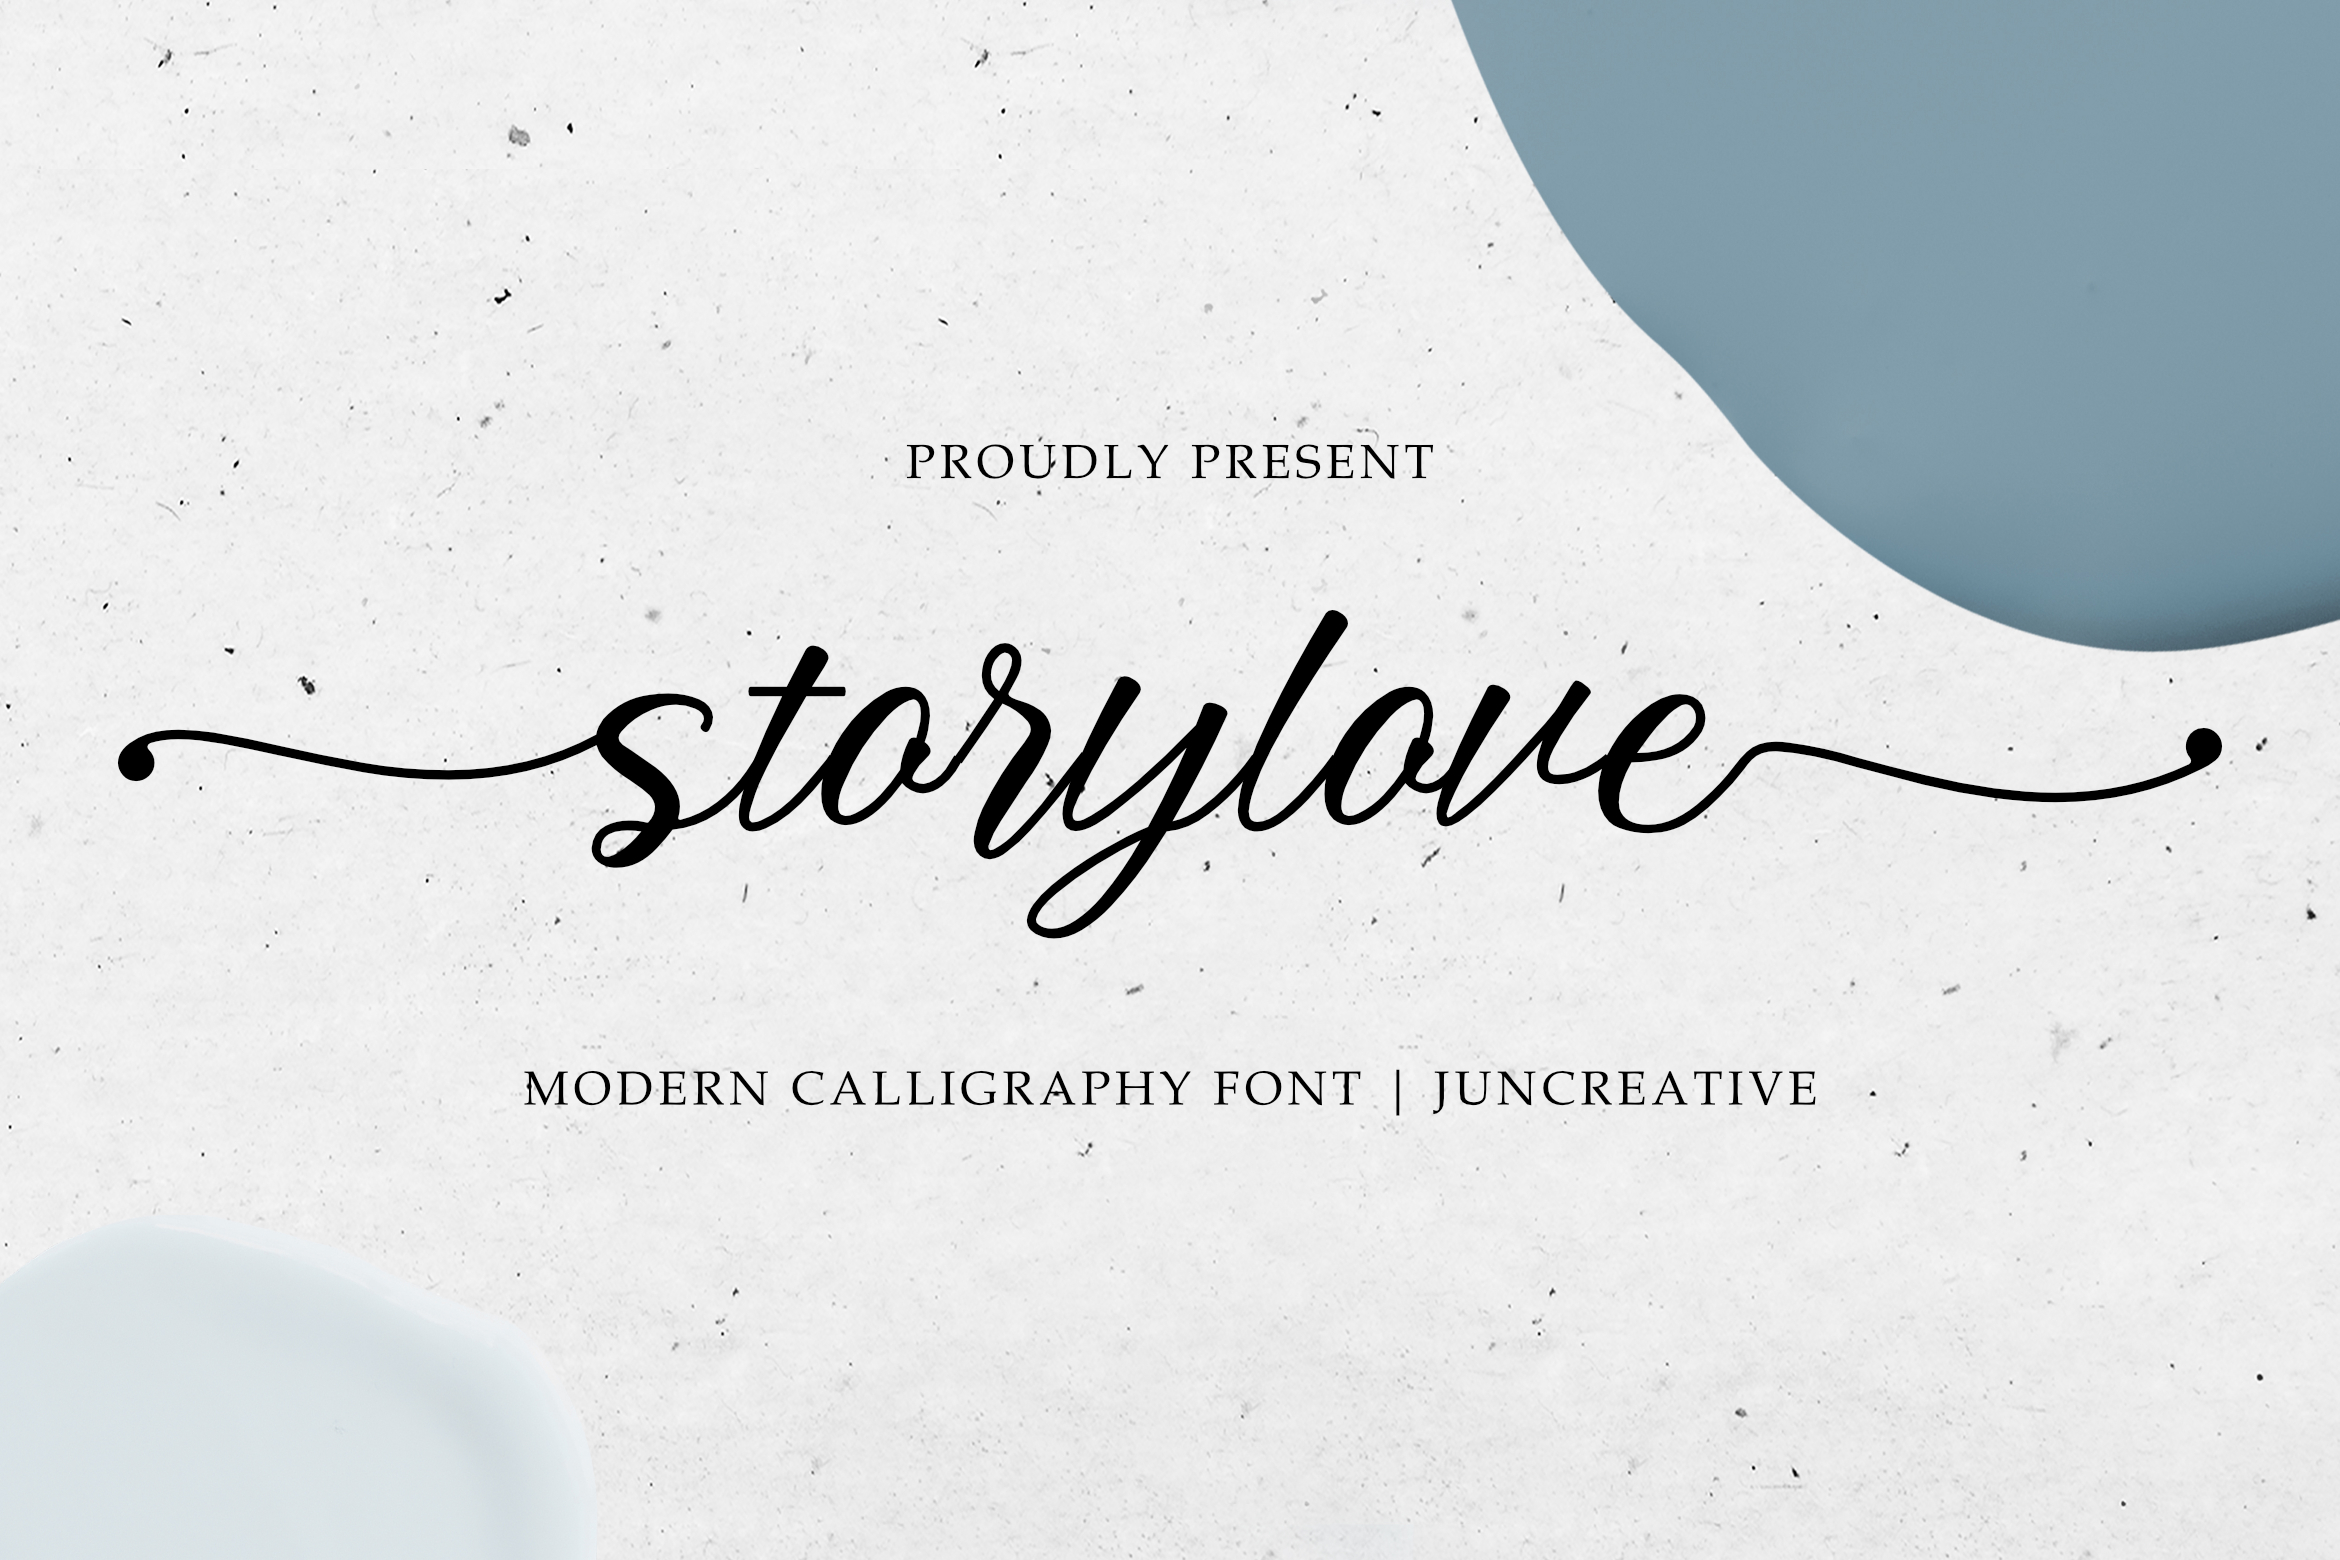 Storylove